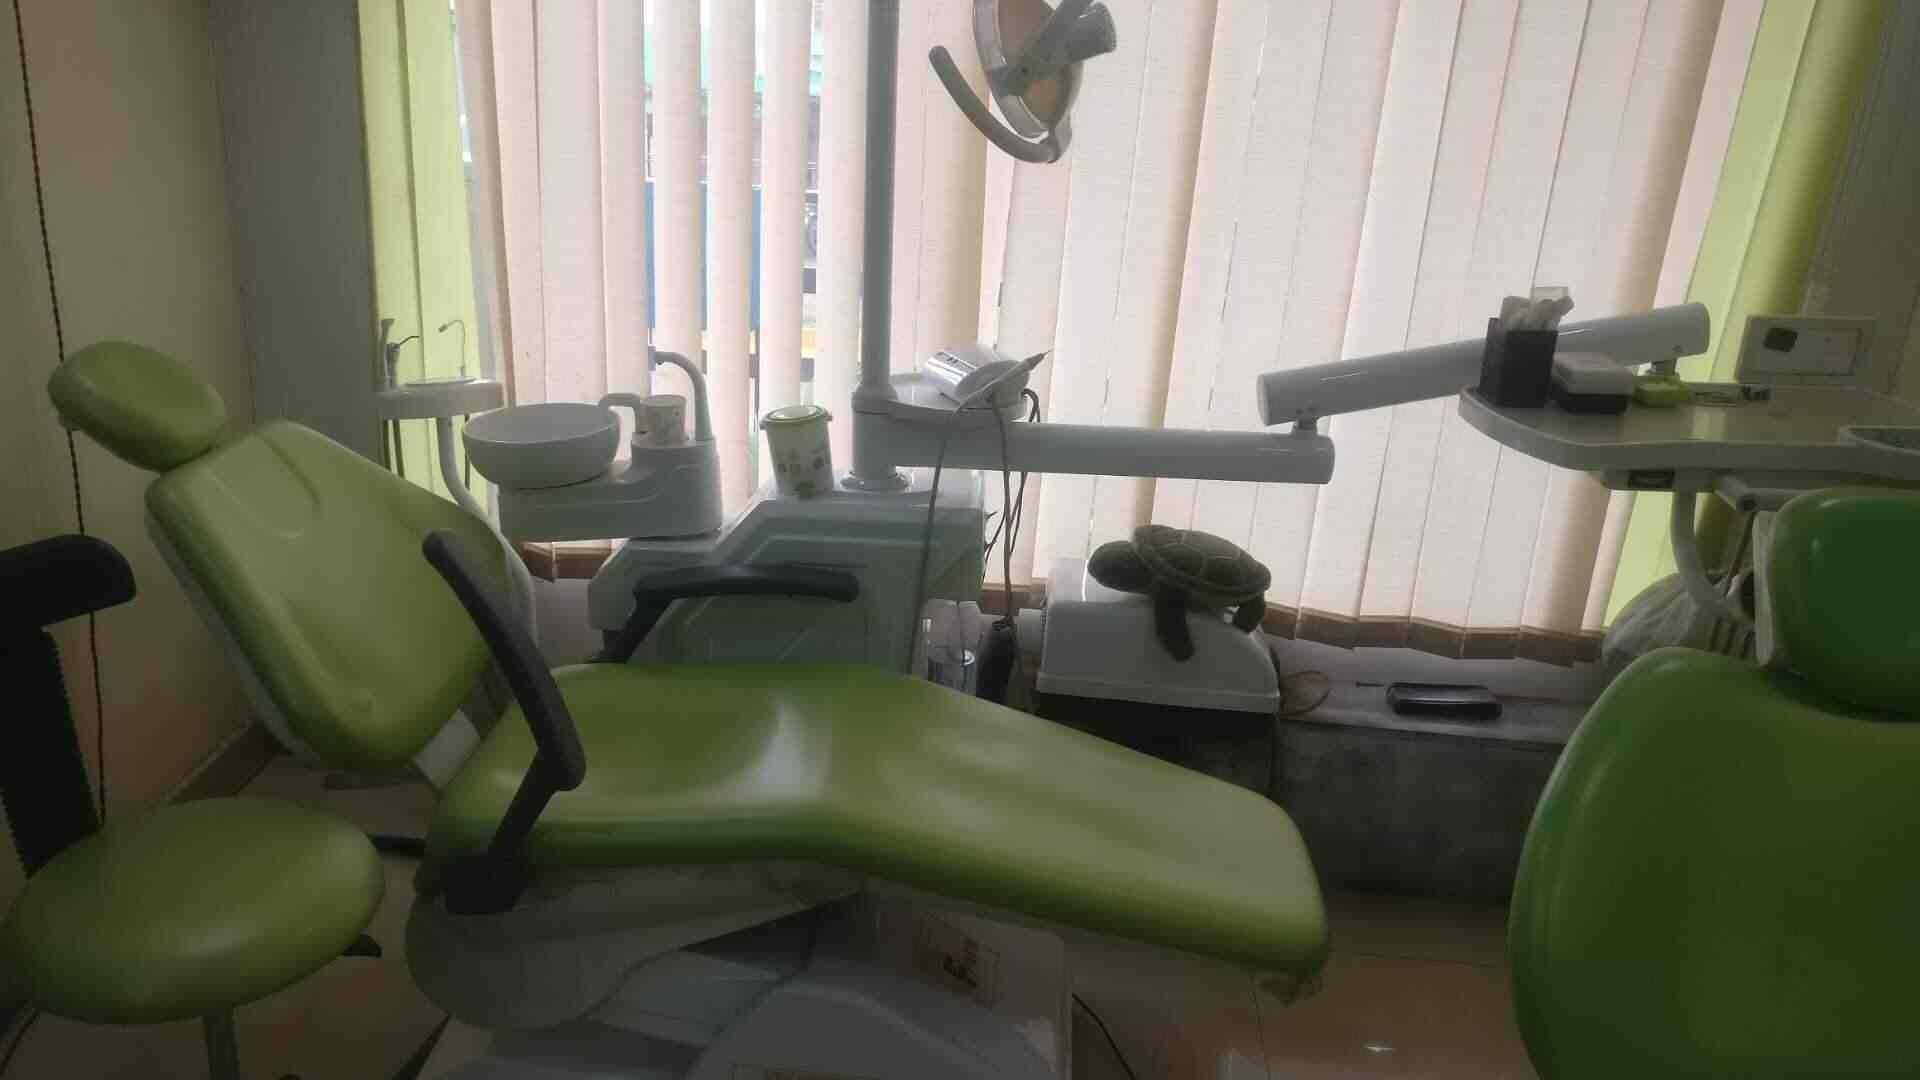 Dr Baghel Dental Laser And Aesthetic in Chandrakiran Nagar Dental Hospitals in Nagpur